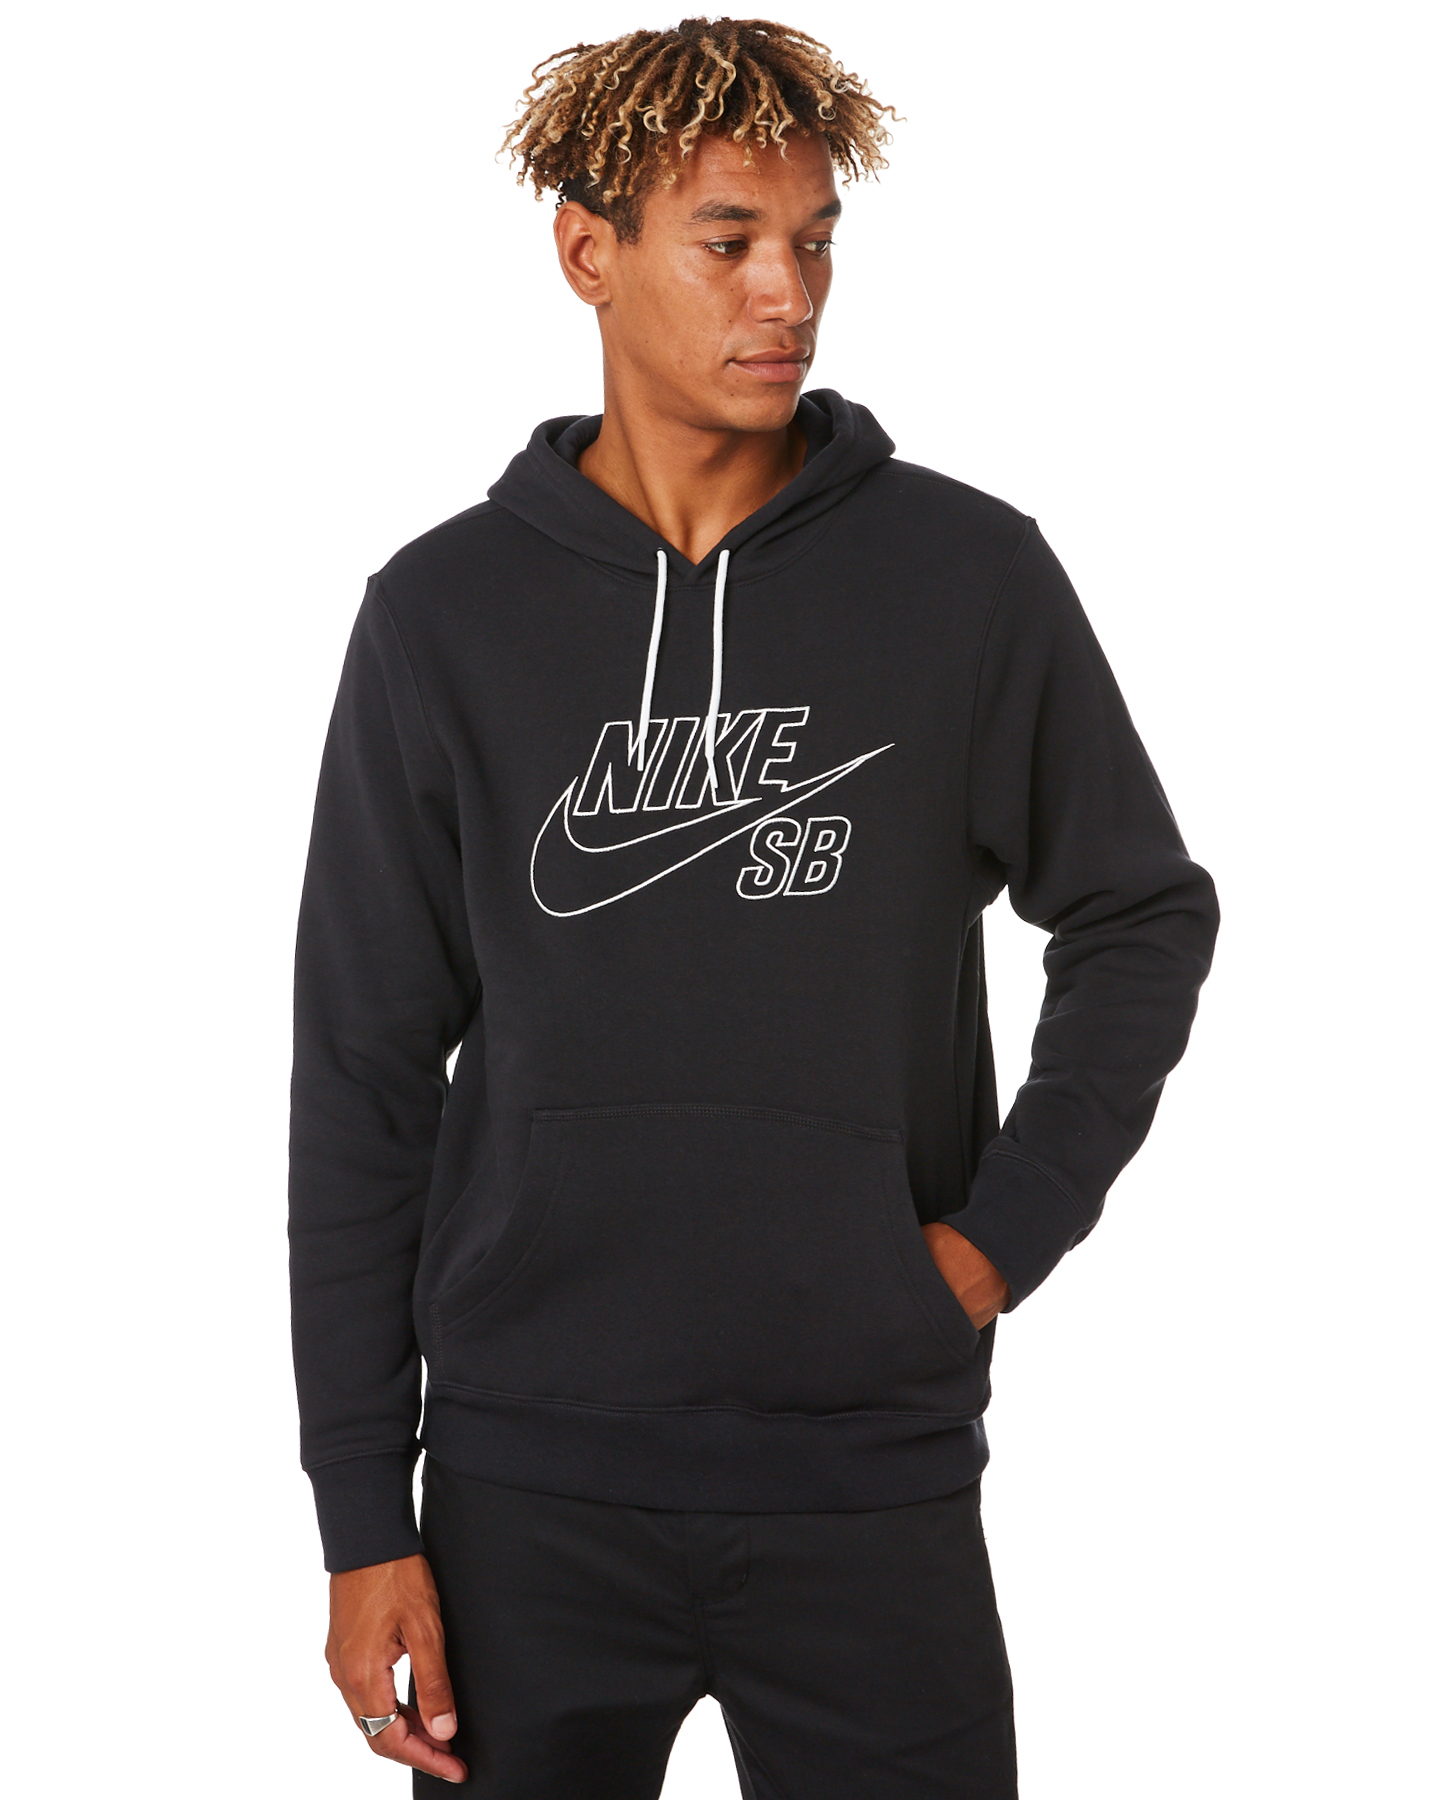 Nike Sb Embroidery Mens Hoodie - Black White | SurfStitch